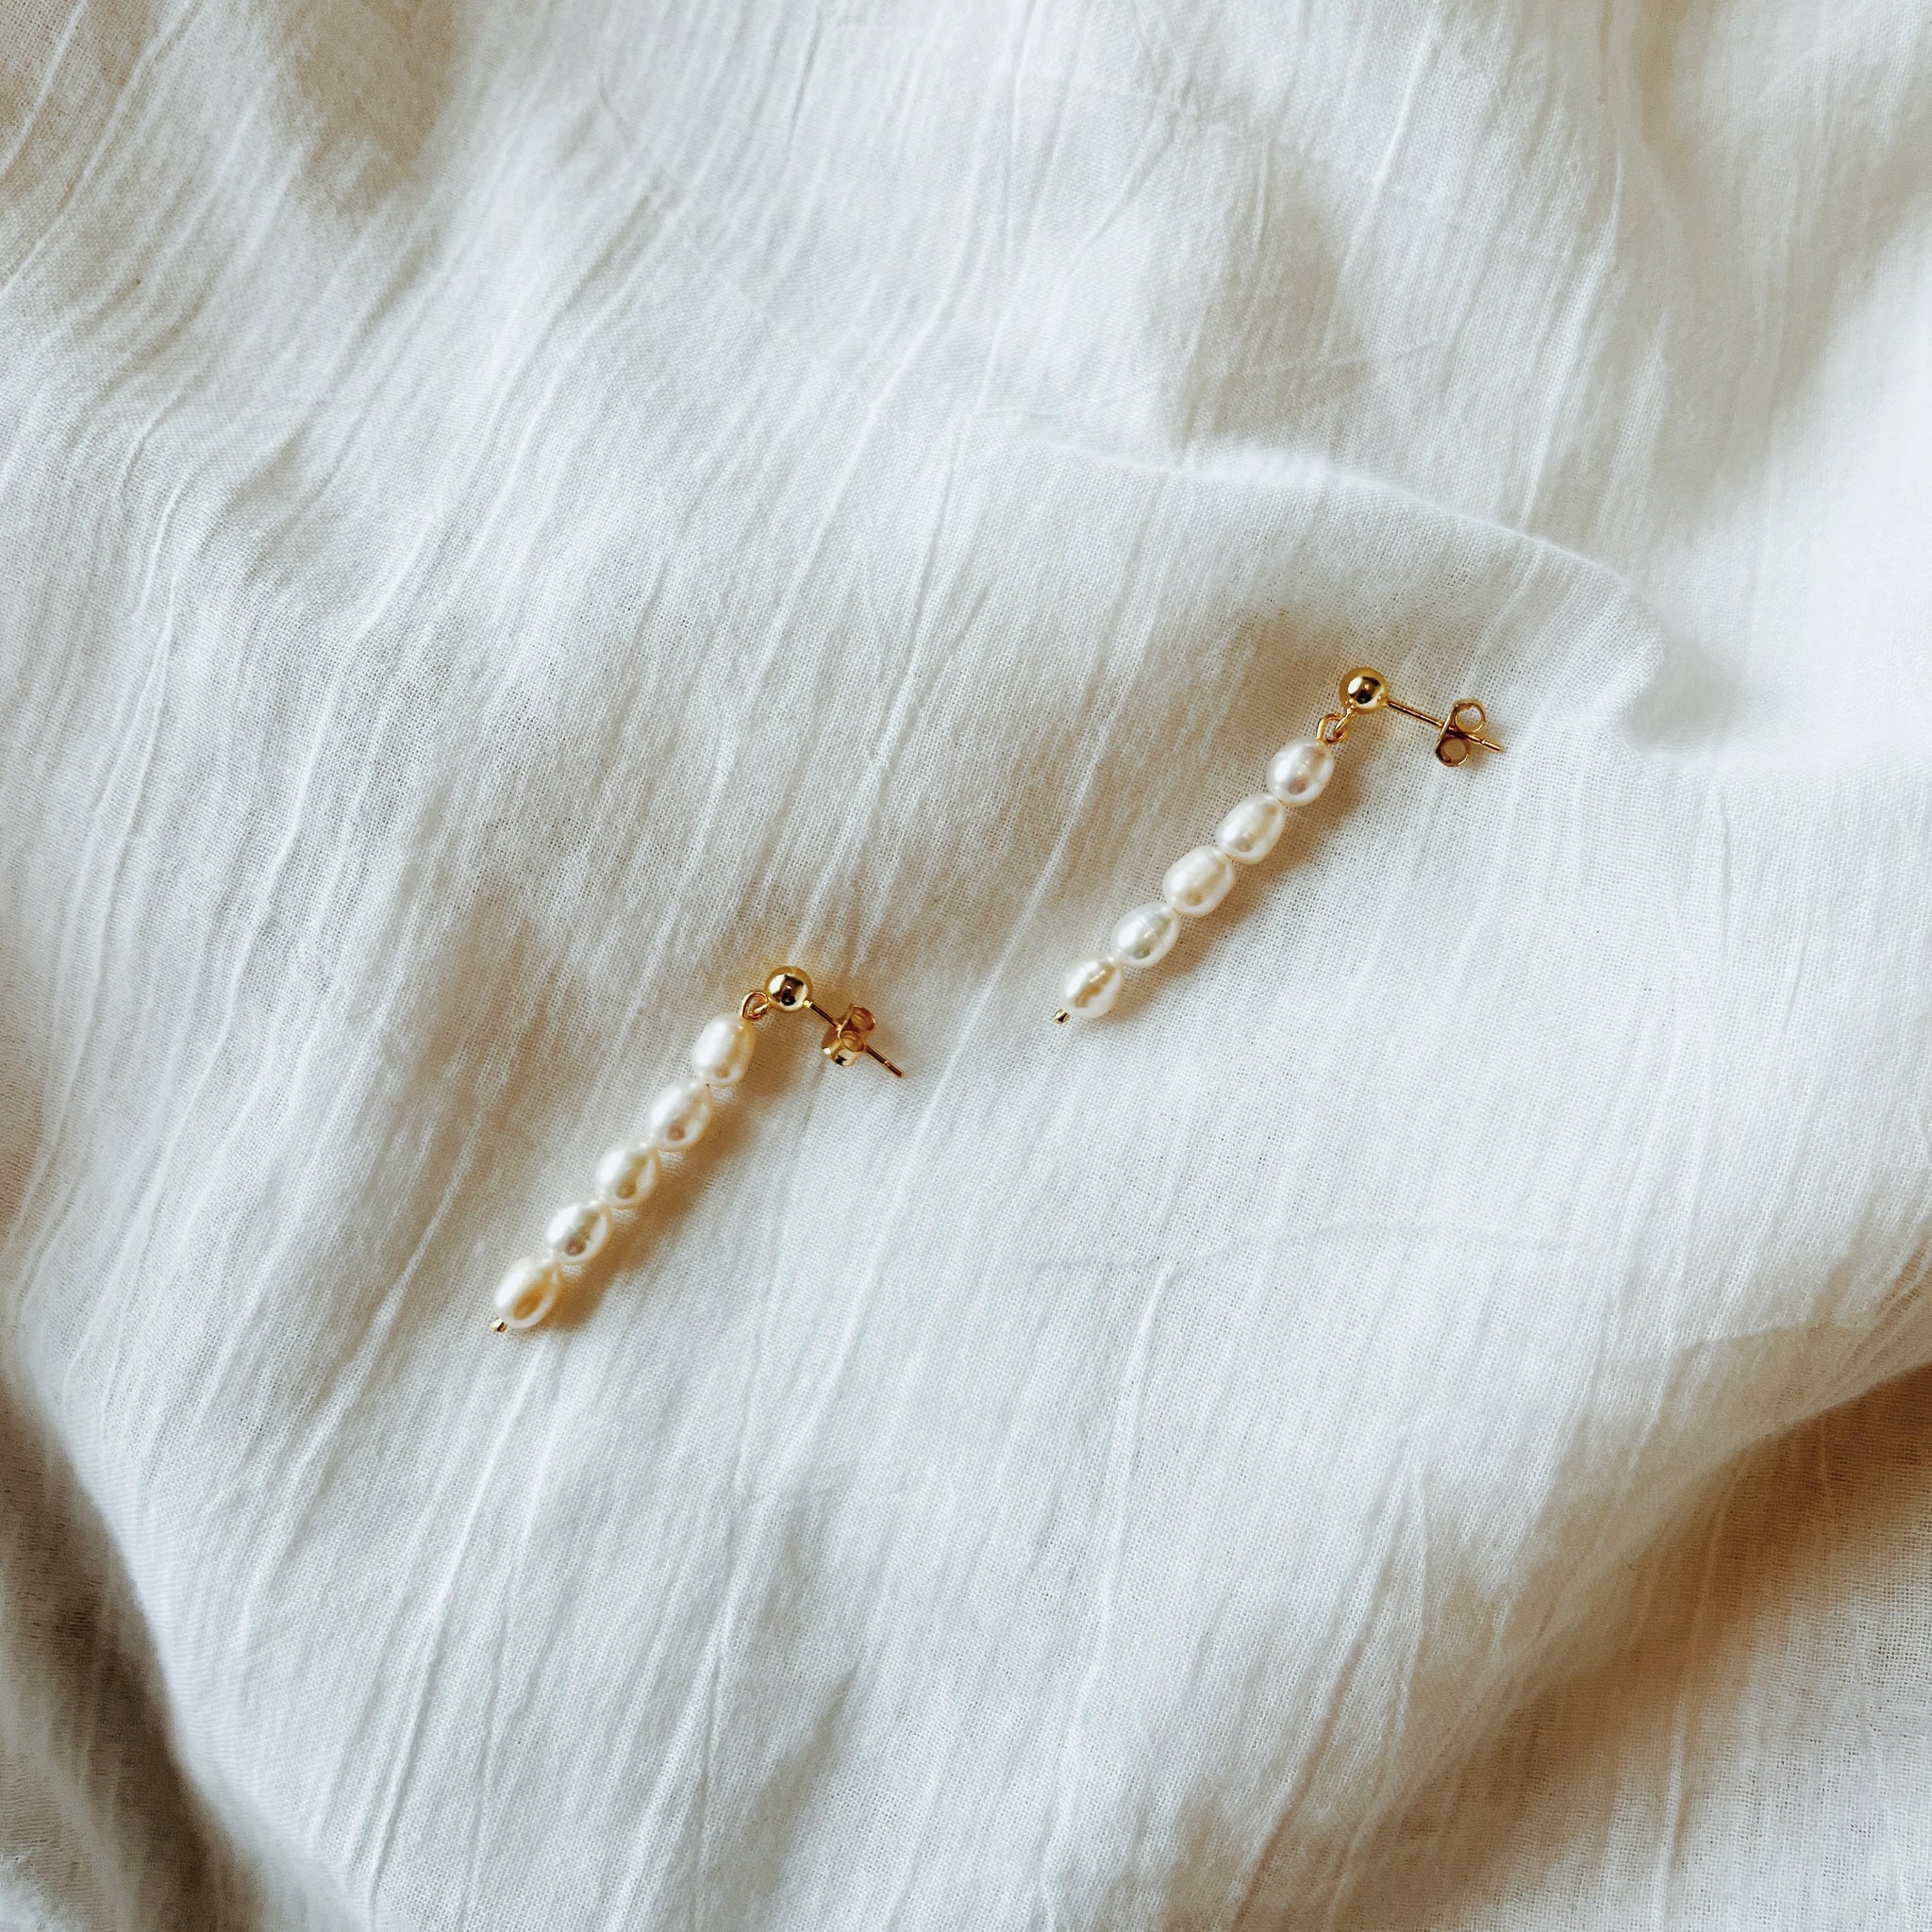 Droplet Pearl Earrings - Gold